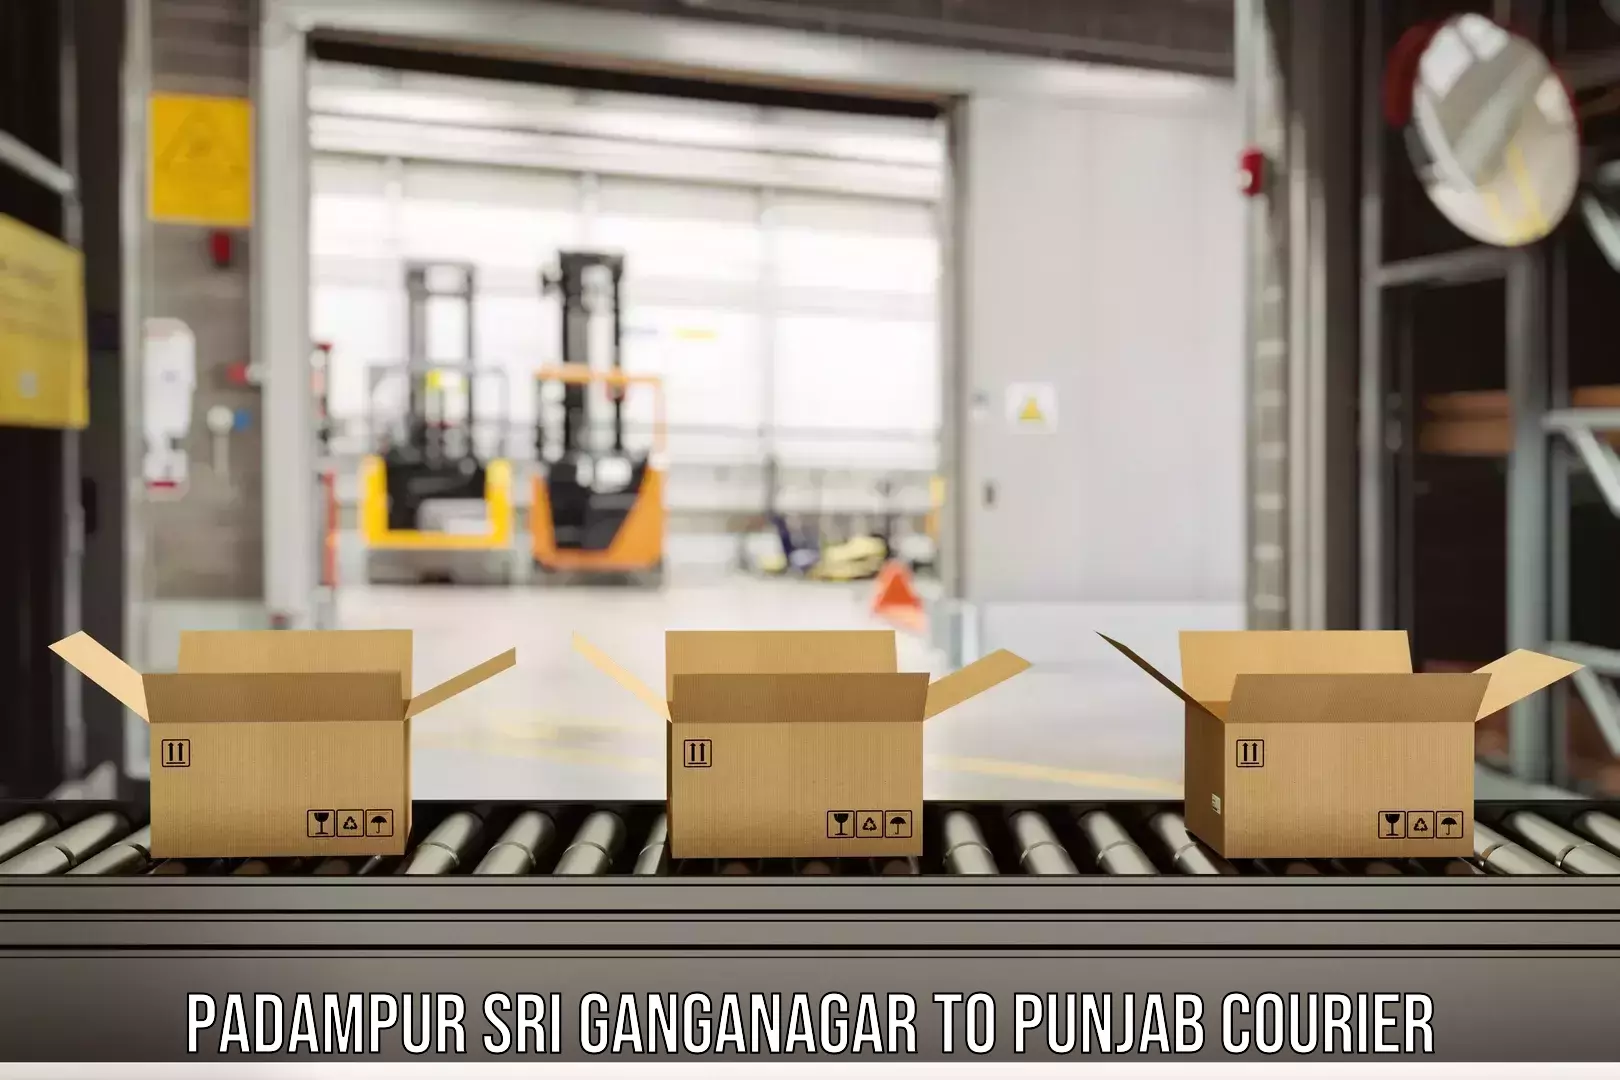 Nationwide parcel services Padampur Sri Ganganagar to Punjab